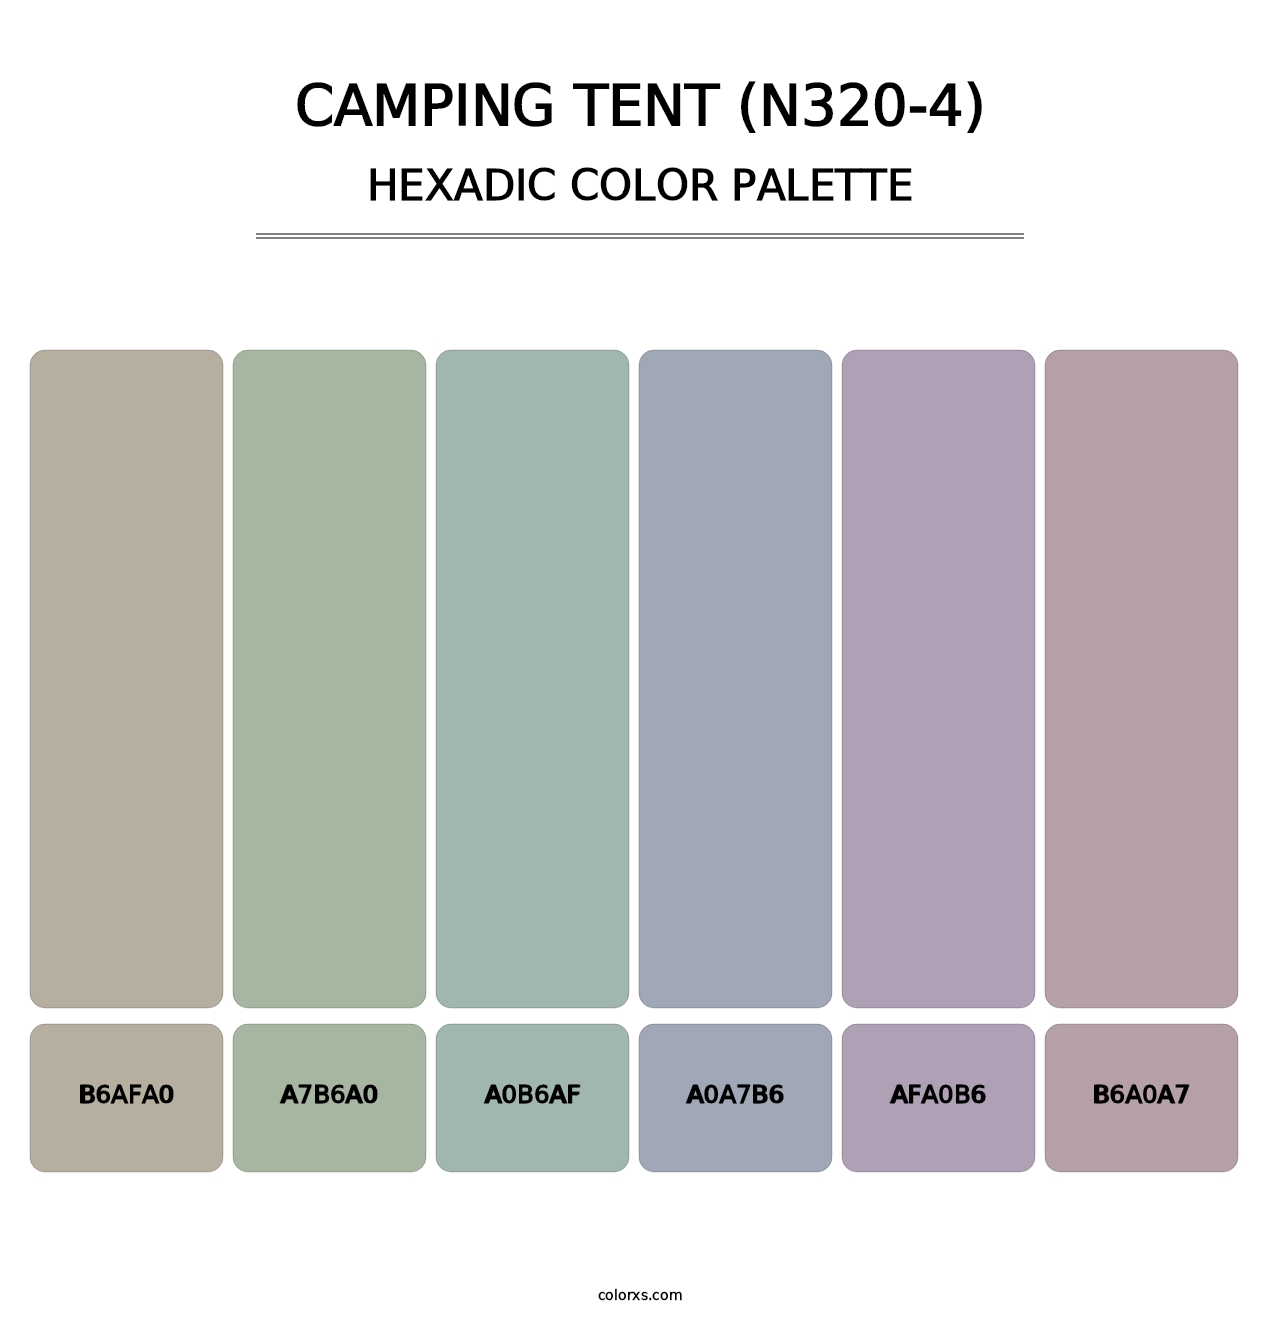 Camping Tent (N320-4) - Hexadic Color Palette